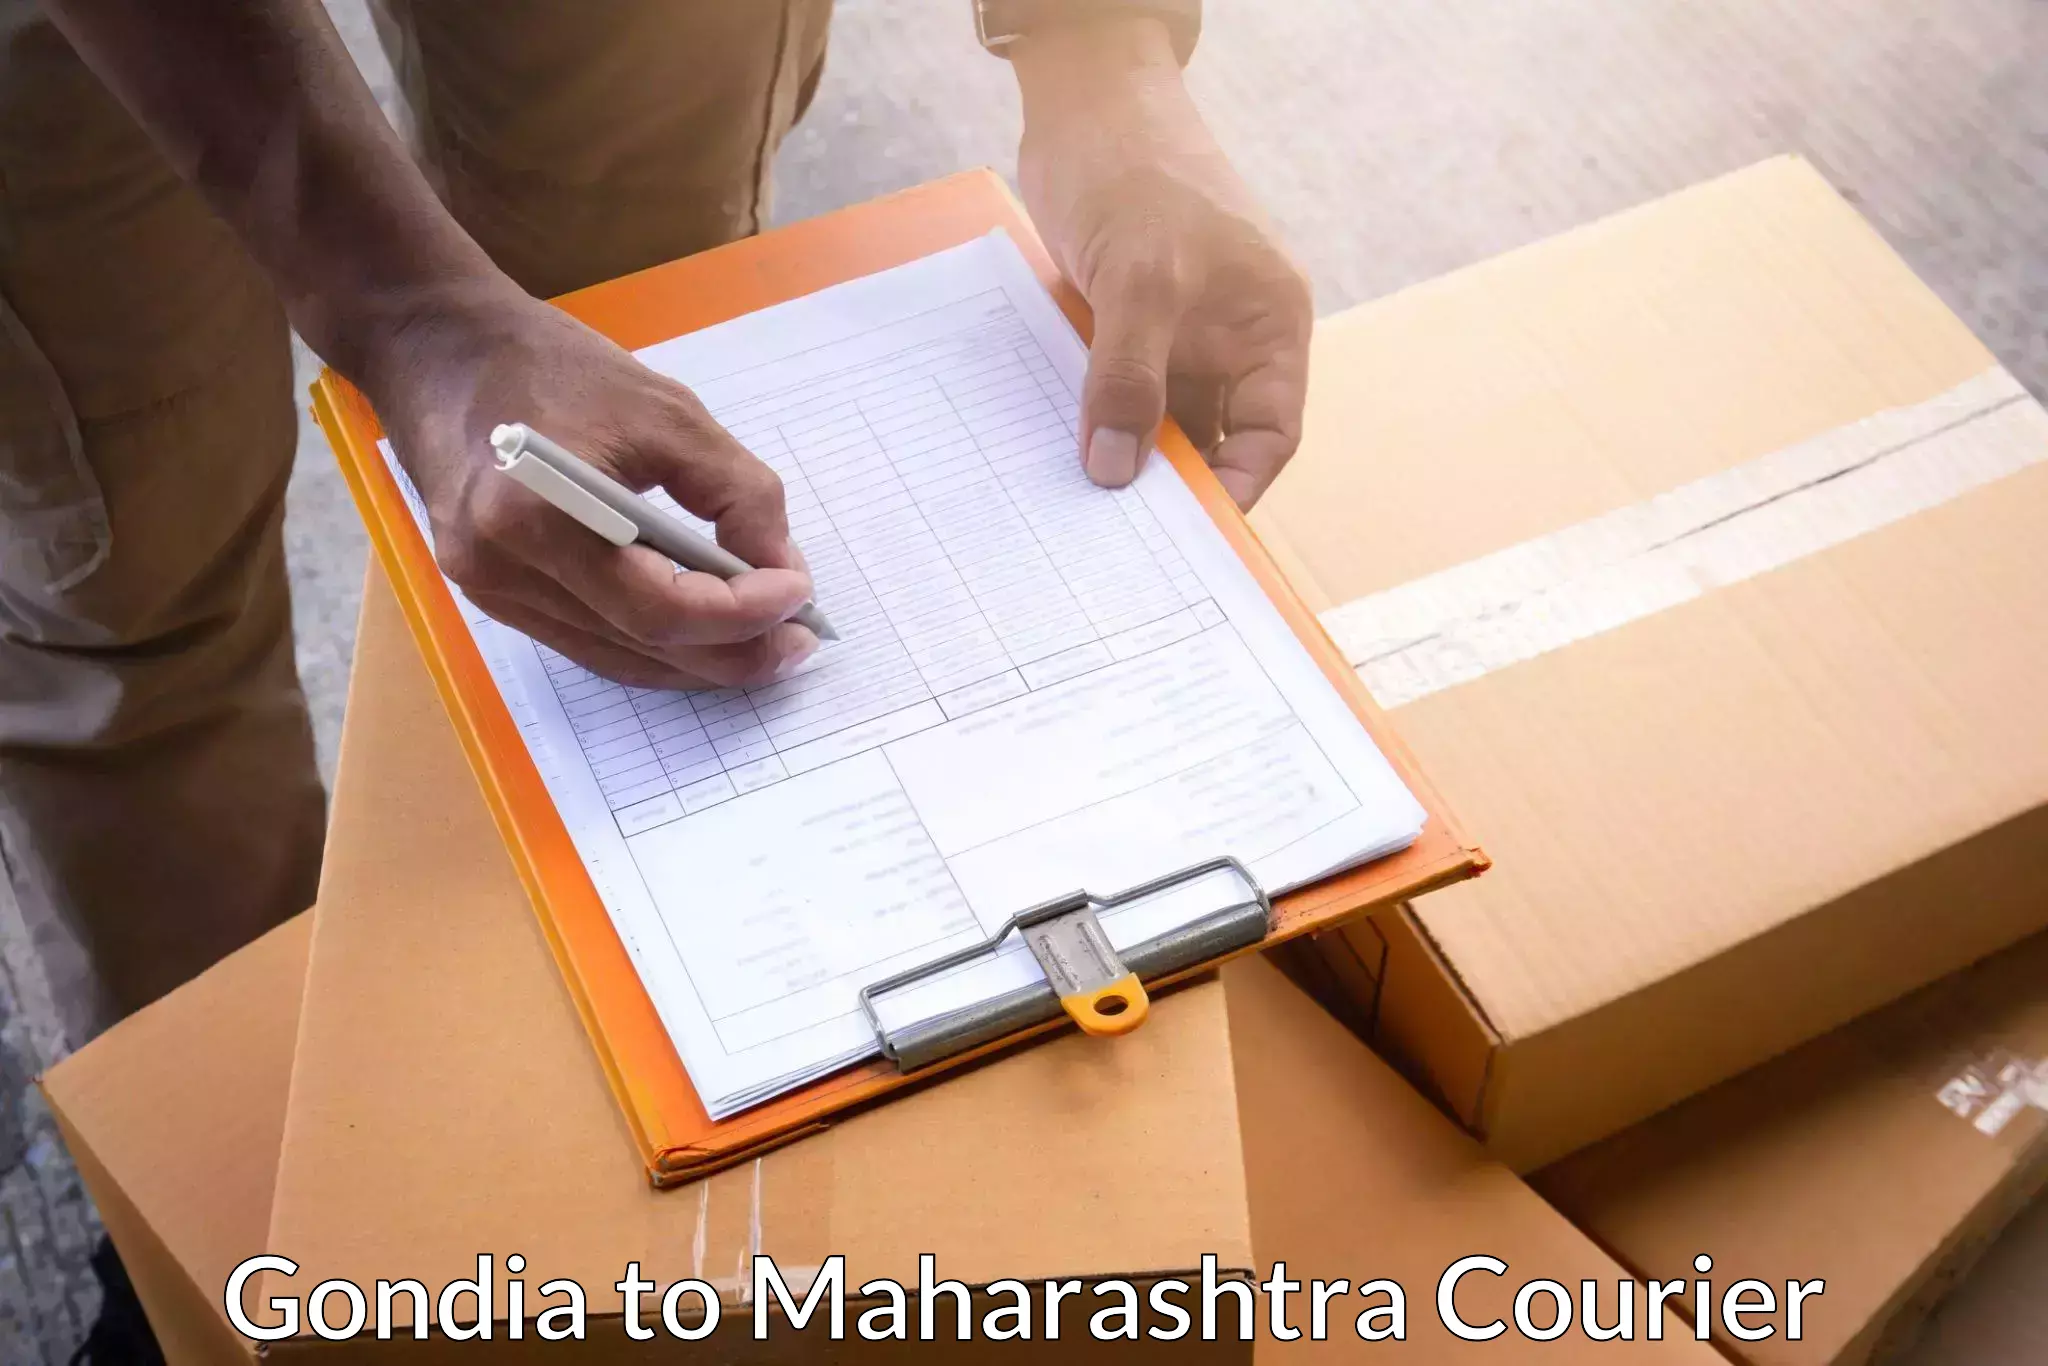 Courier service comparison Gondia to Maharashtra